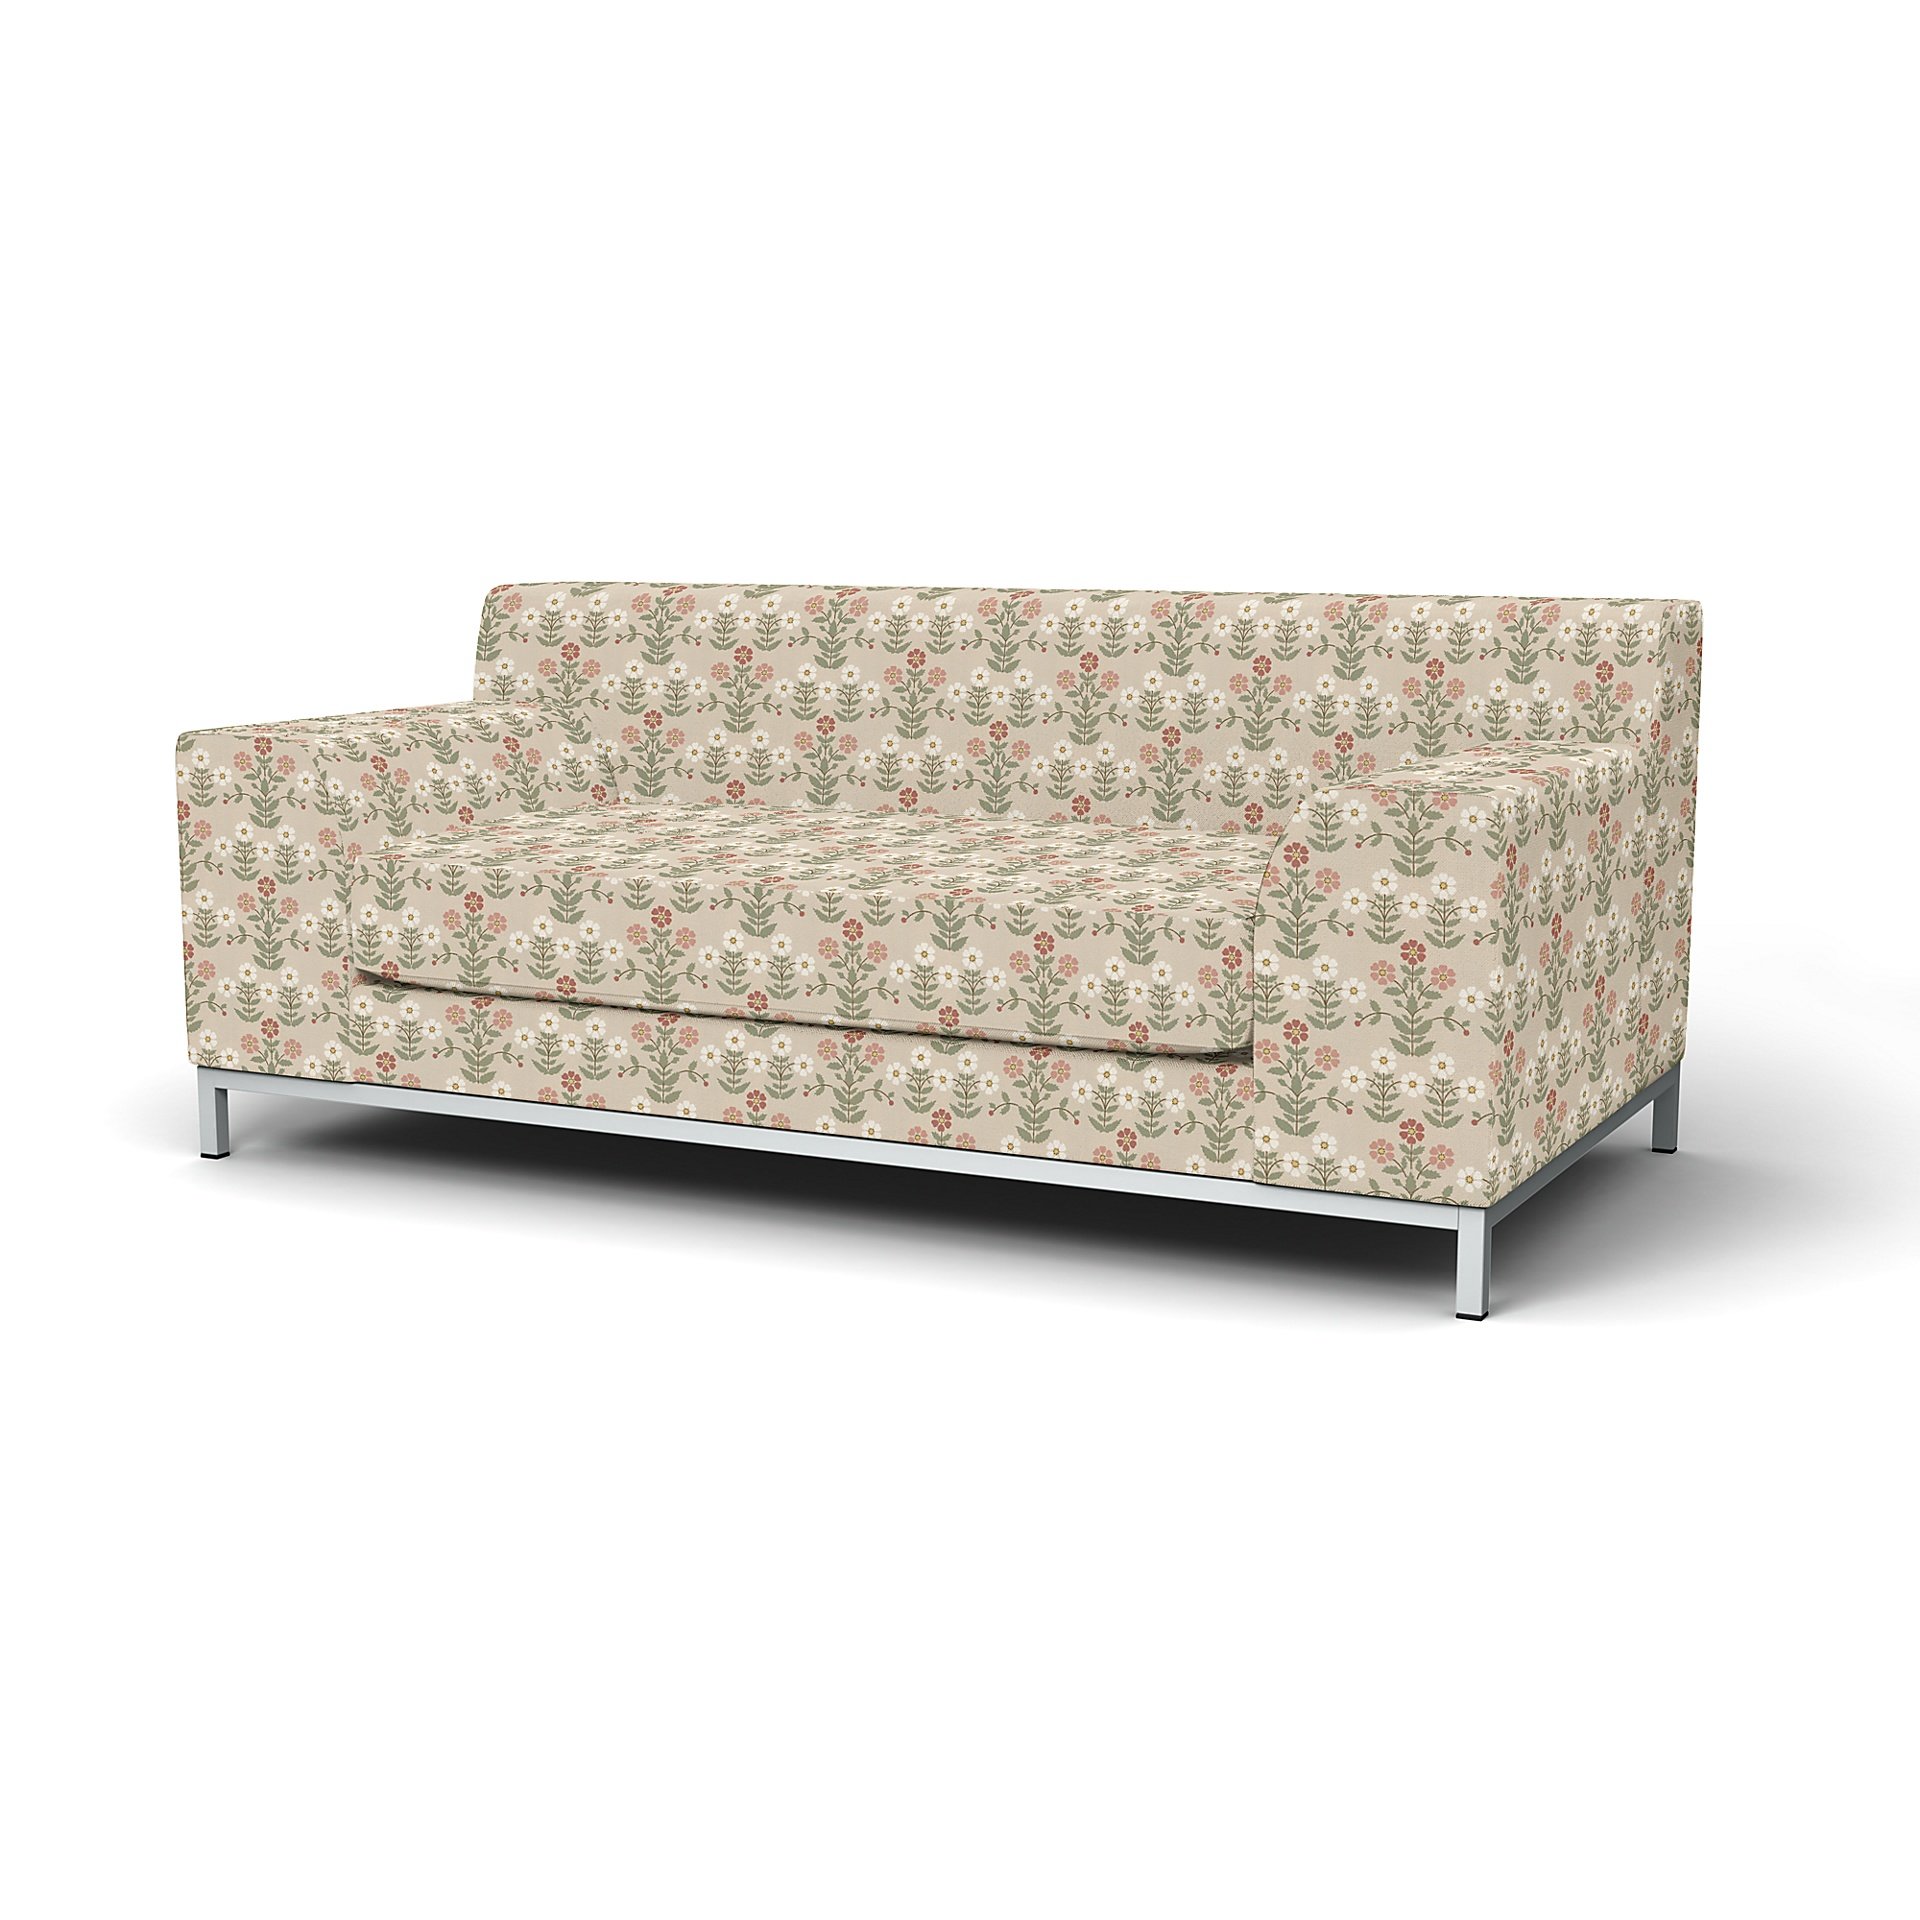 IKEA - Kramfors 2 Seater Sofa Cover, Pink Sippor, BEMZ x BORASTAPETER COLLECTION - Bemz